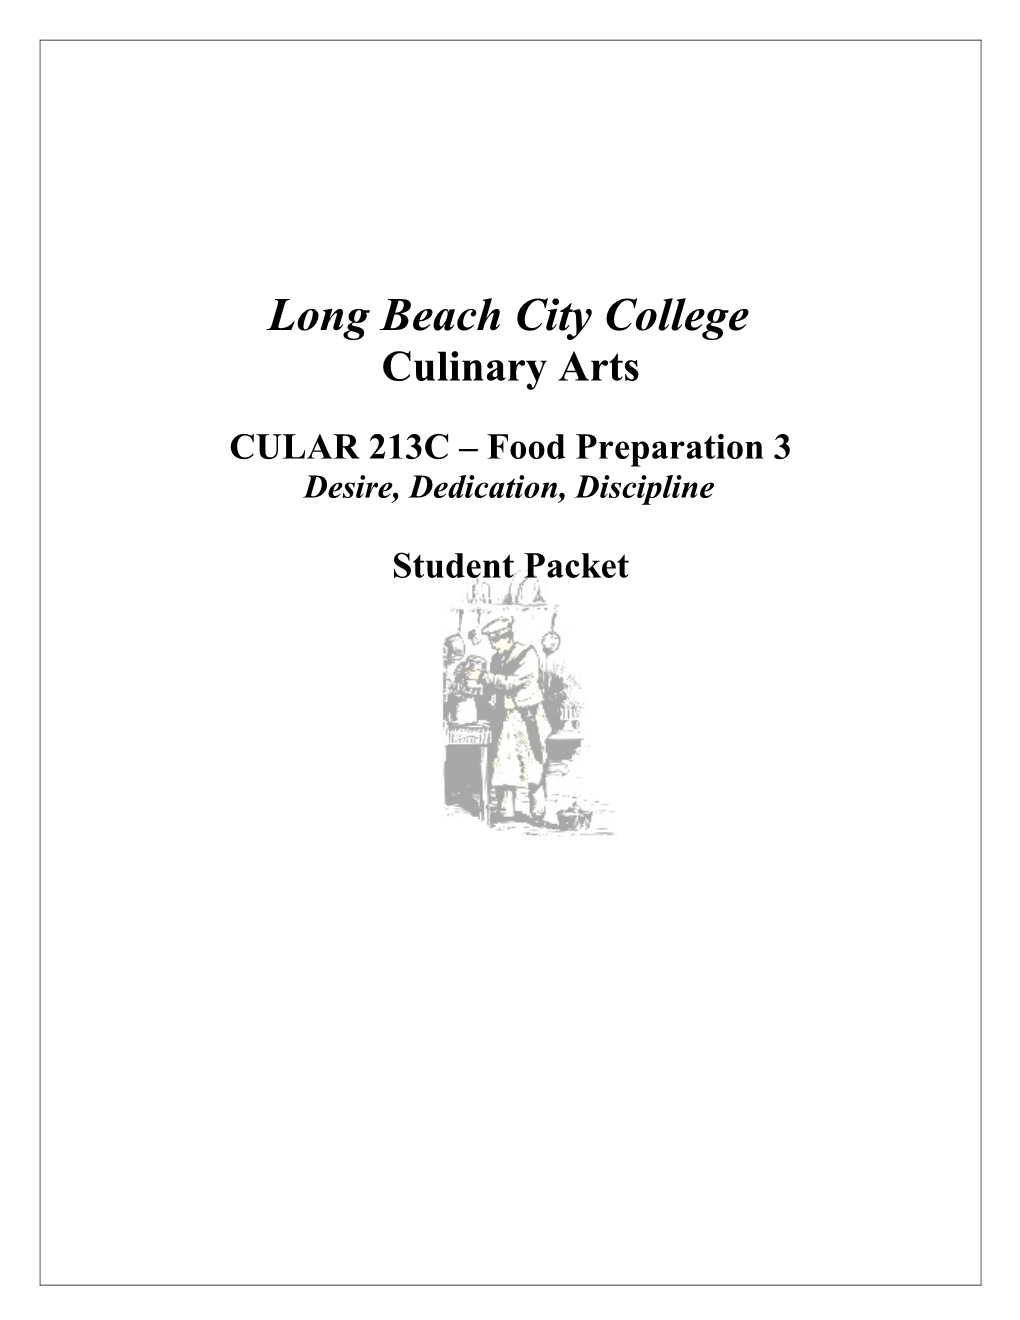 Long Beach City College s1